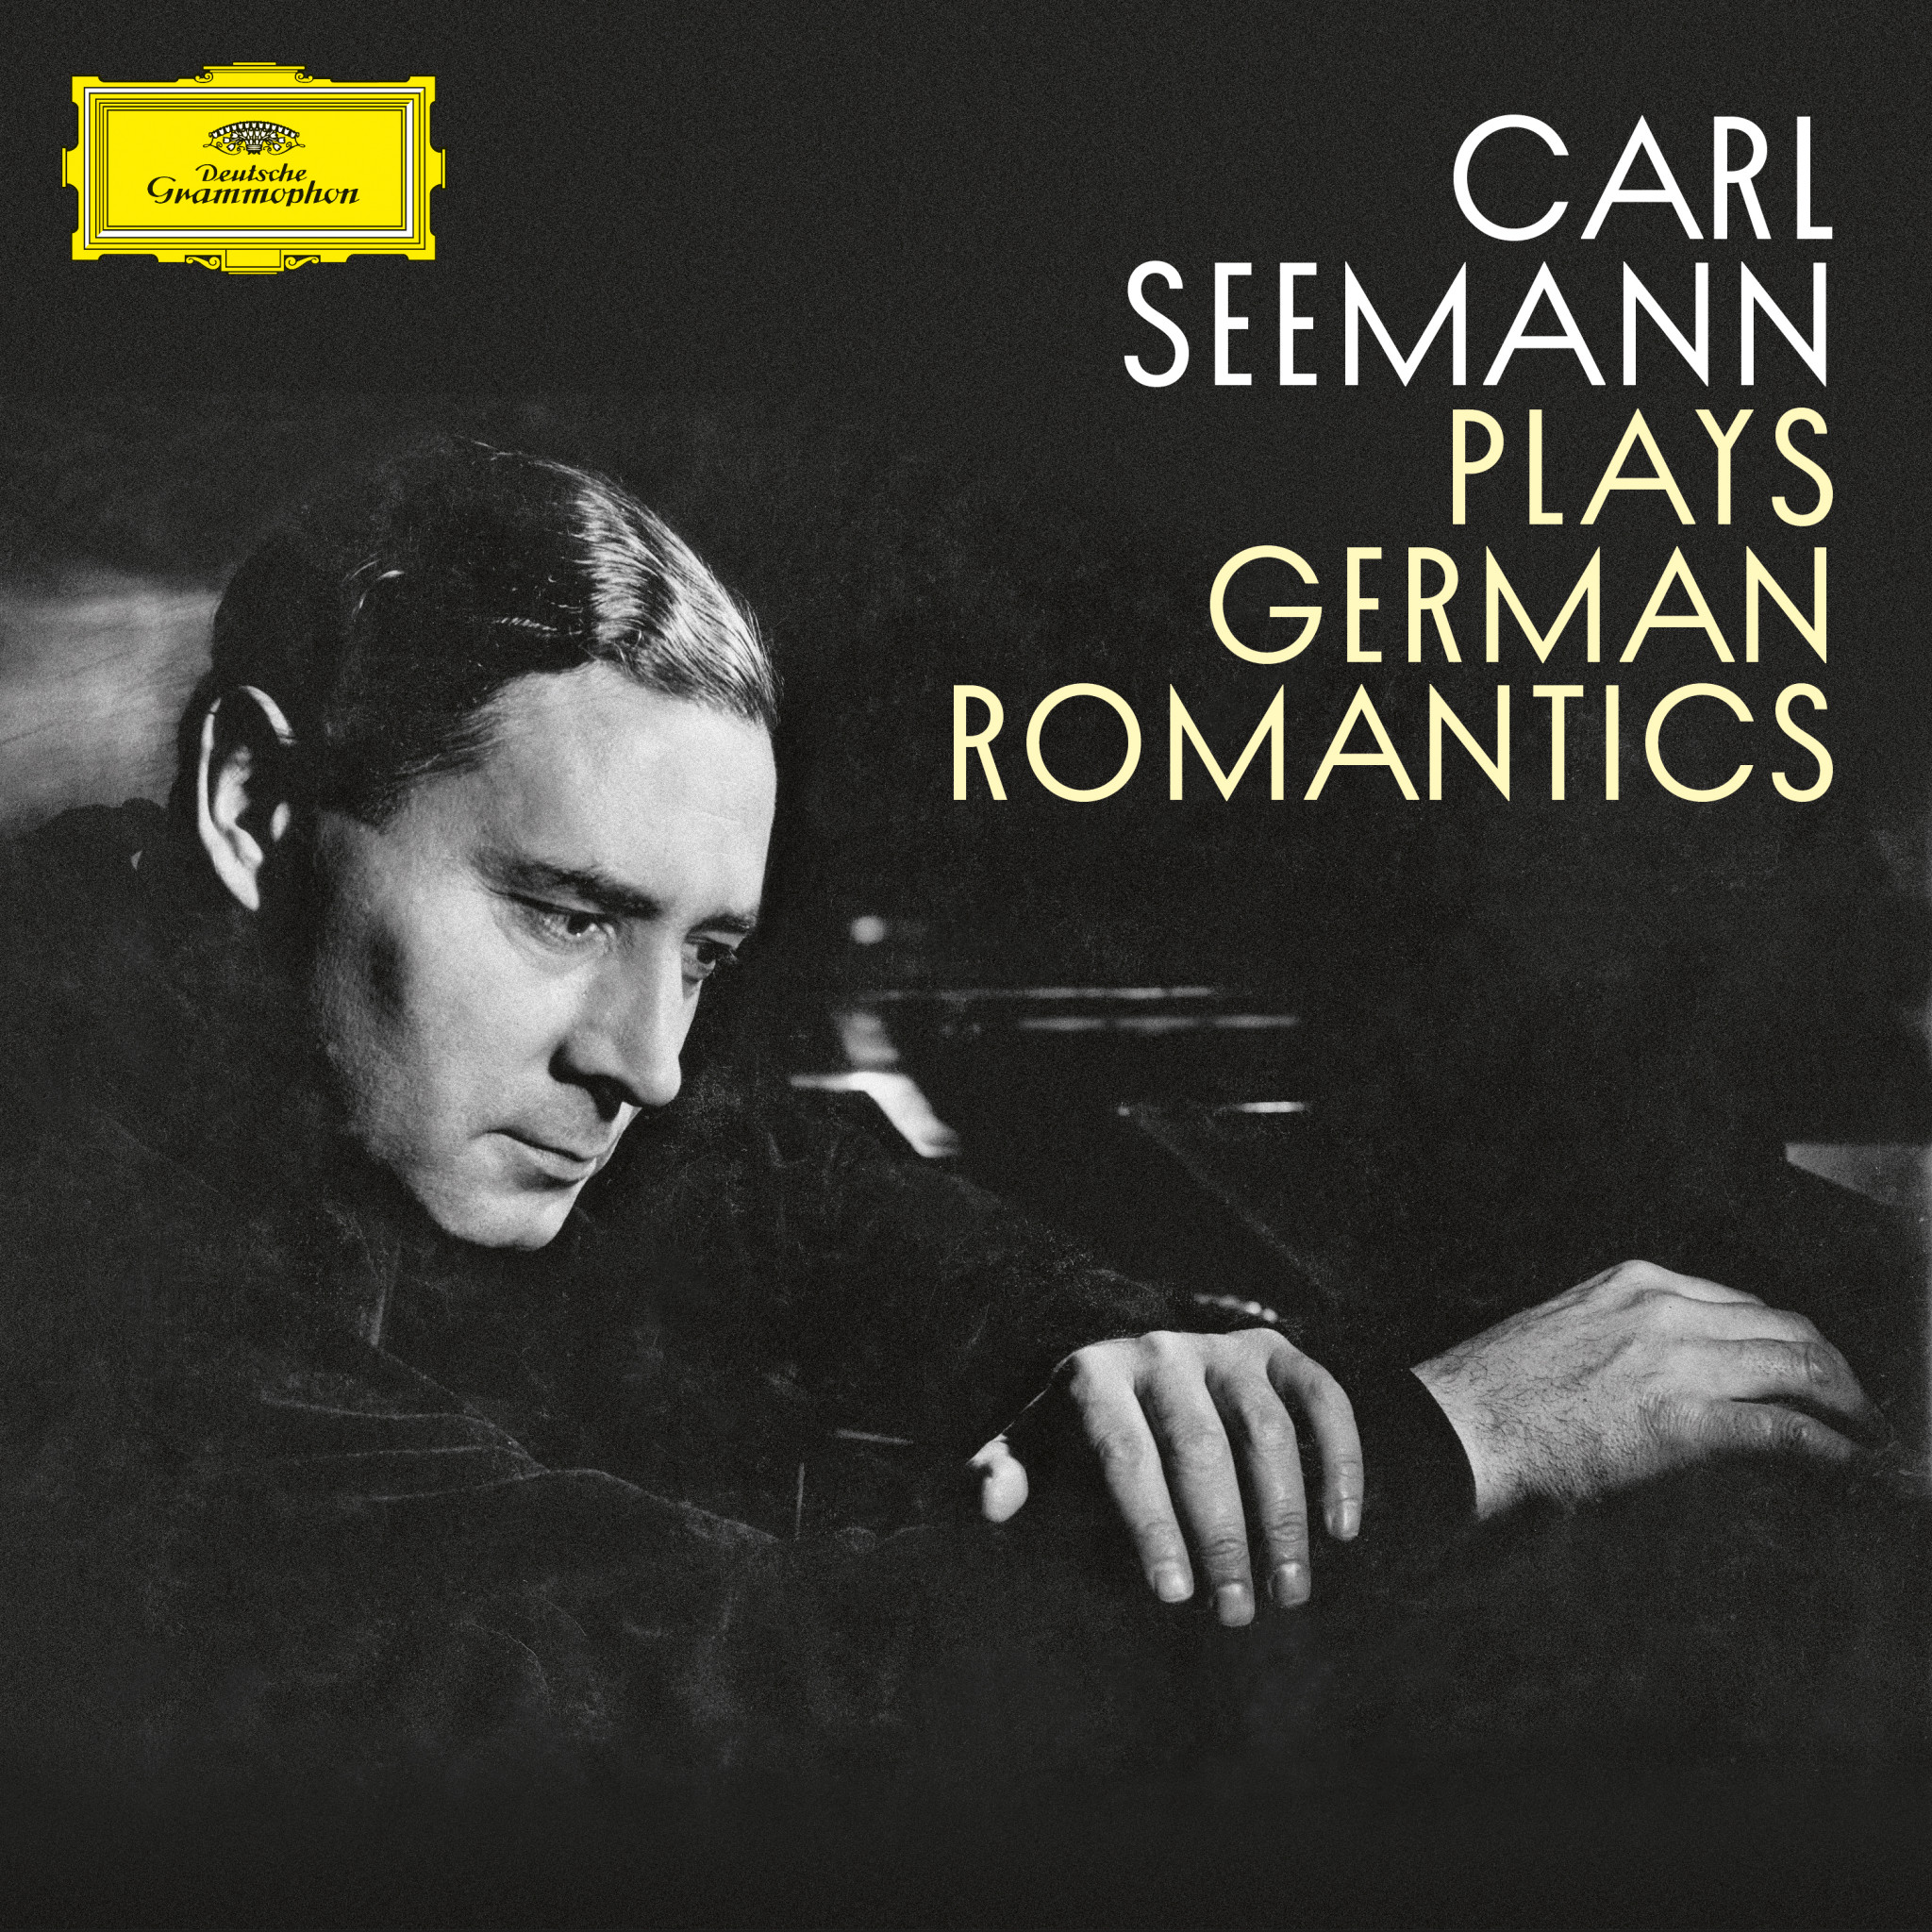 Carl Seemann plays German Romantics